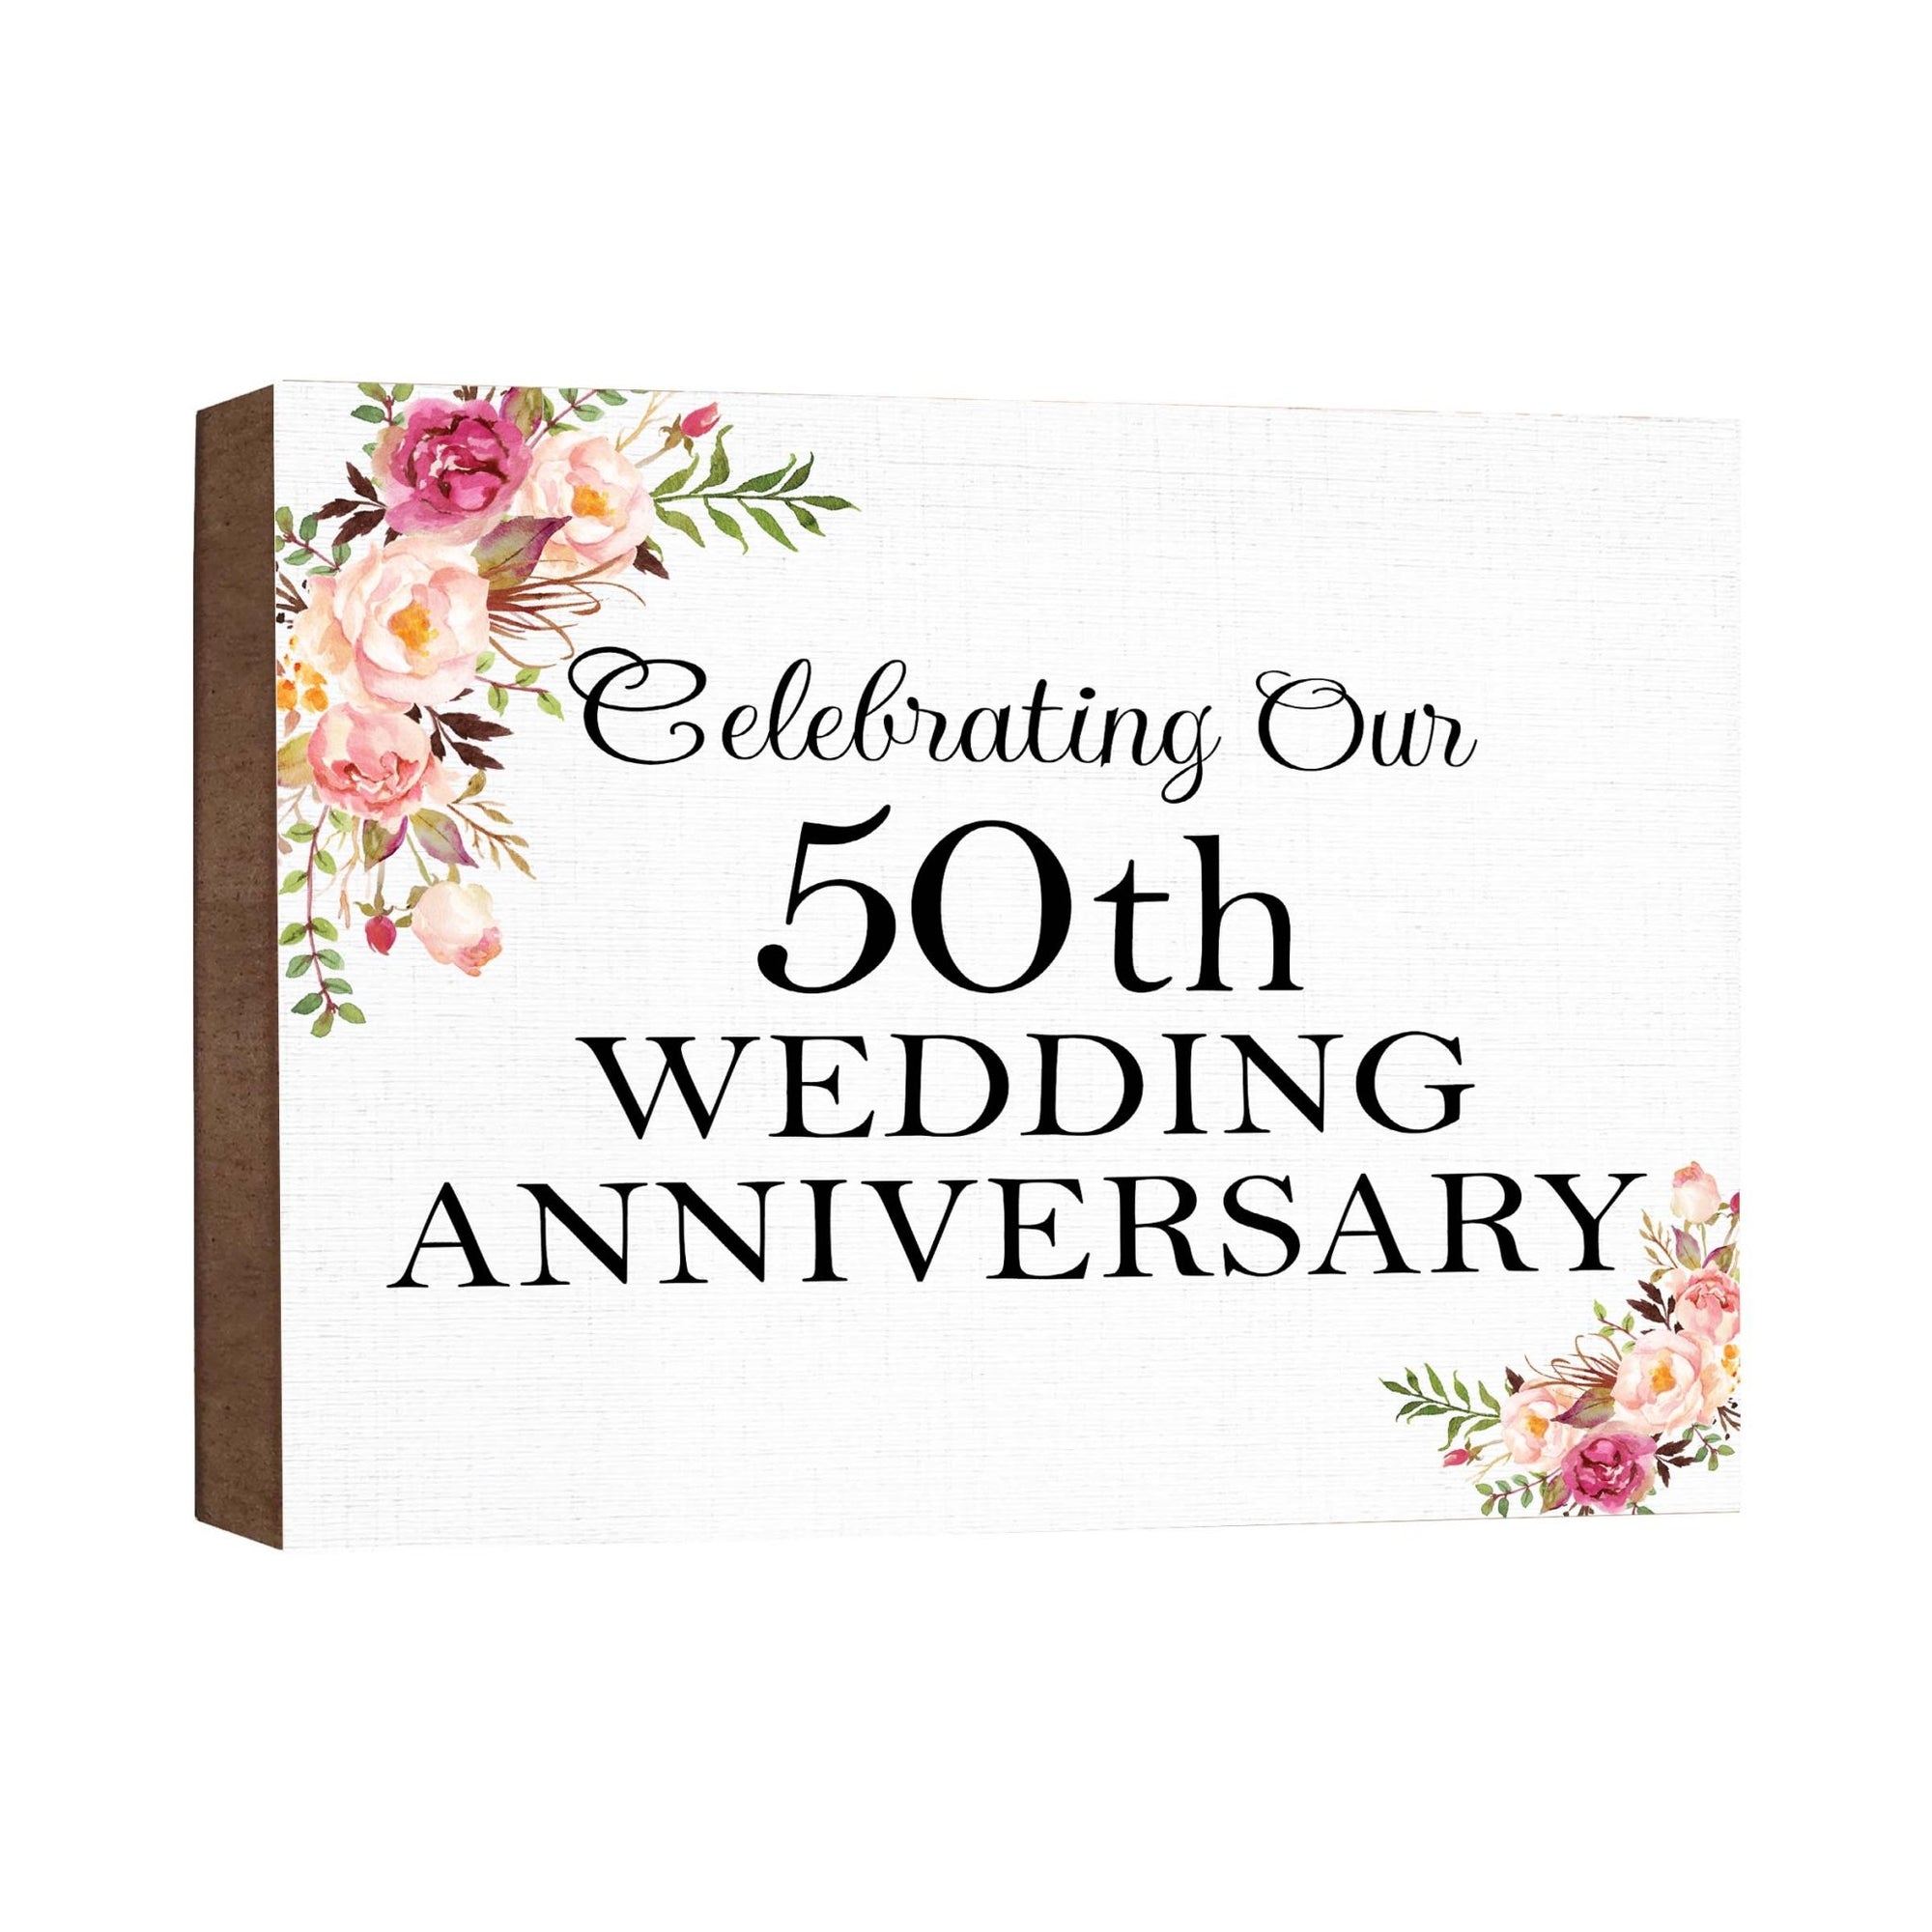 50th Wedding Anniversary Wall Plaque - Celebrating - LifeSong Milestones